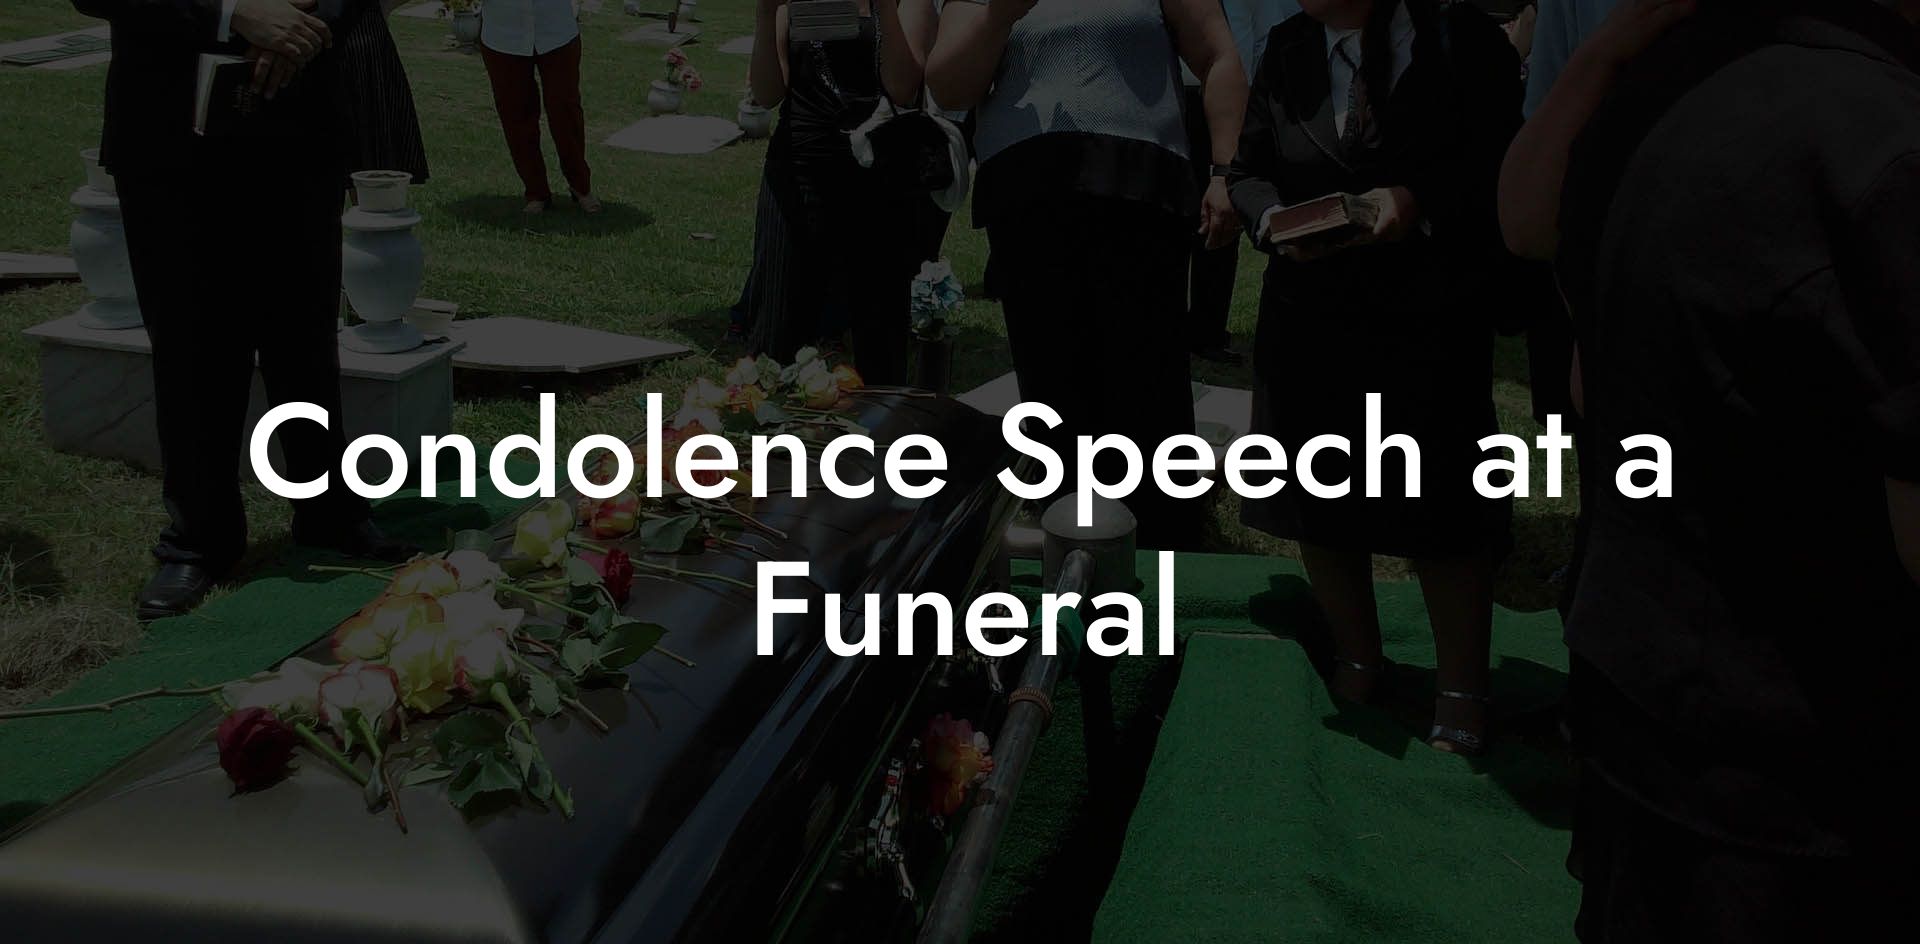 Condolence Speech at a Funeral